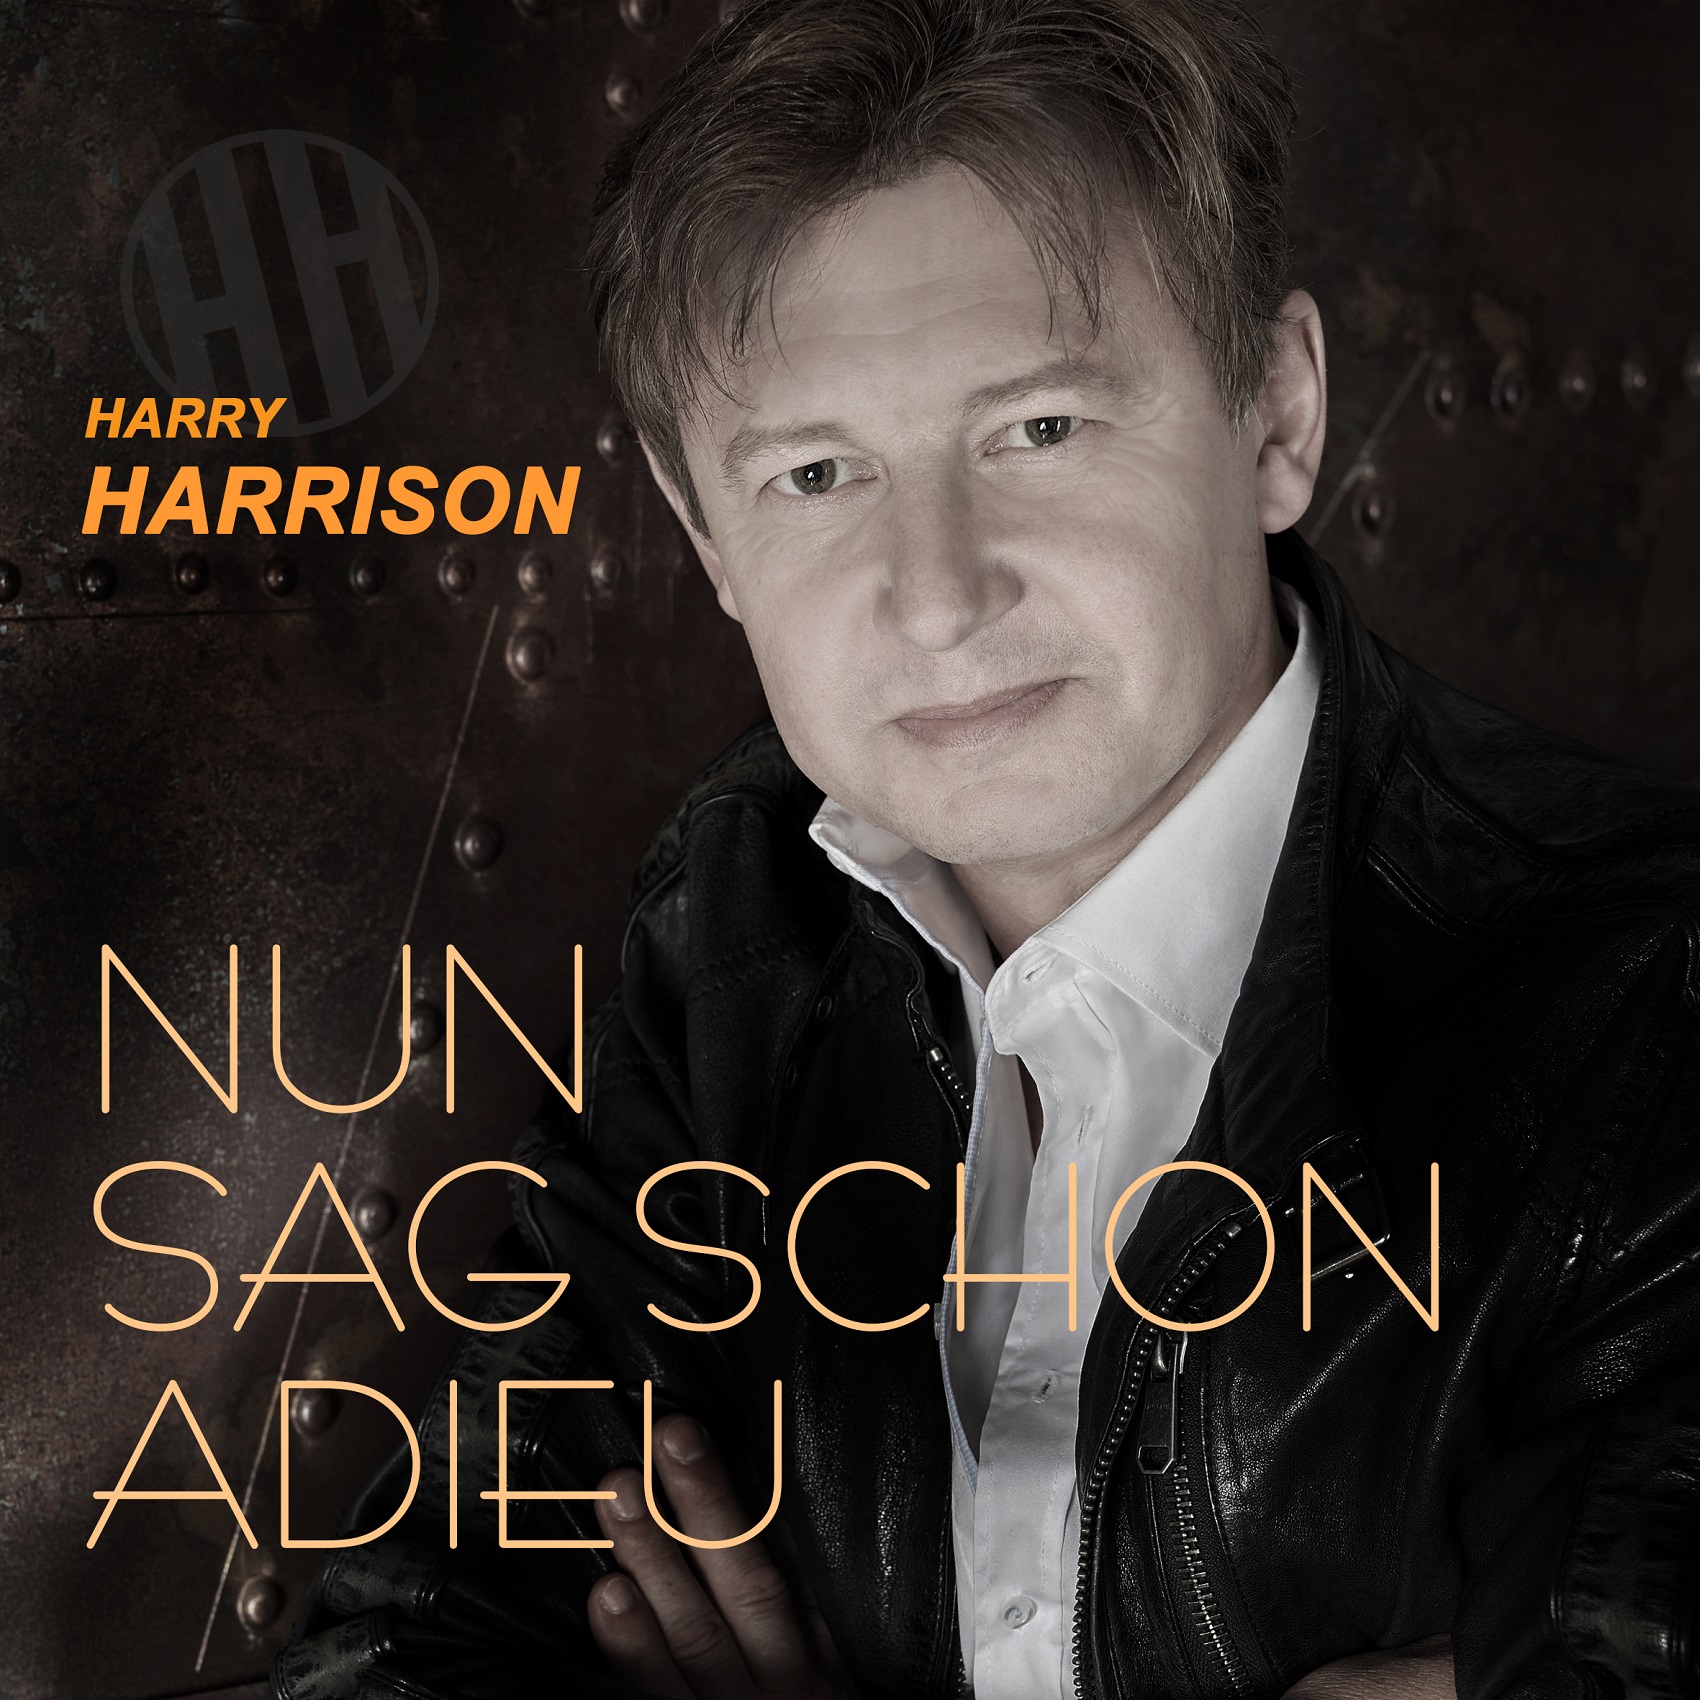 Harry Harrison - Nun sag schon adieu - Cover.jpg